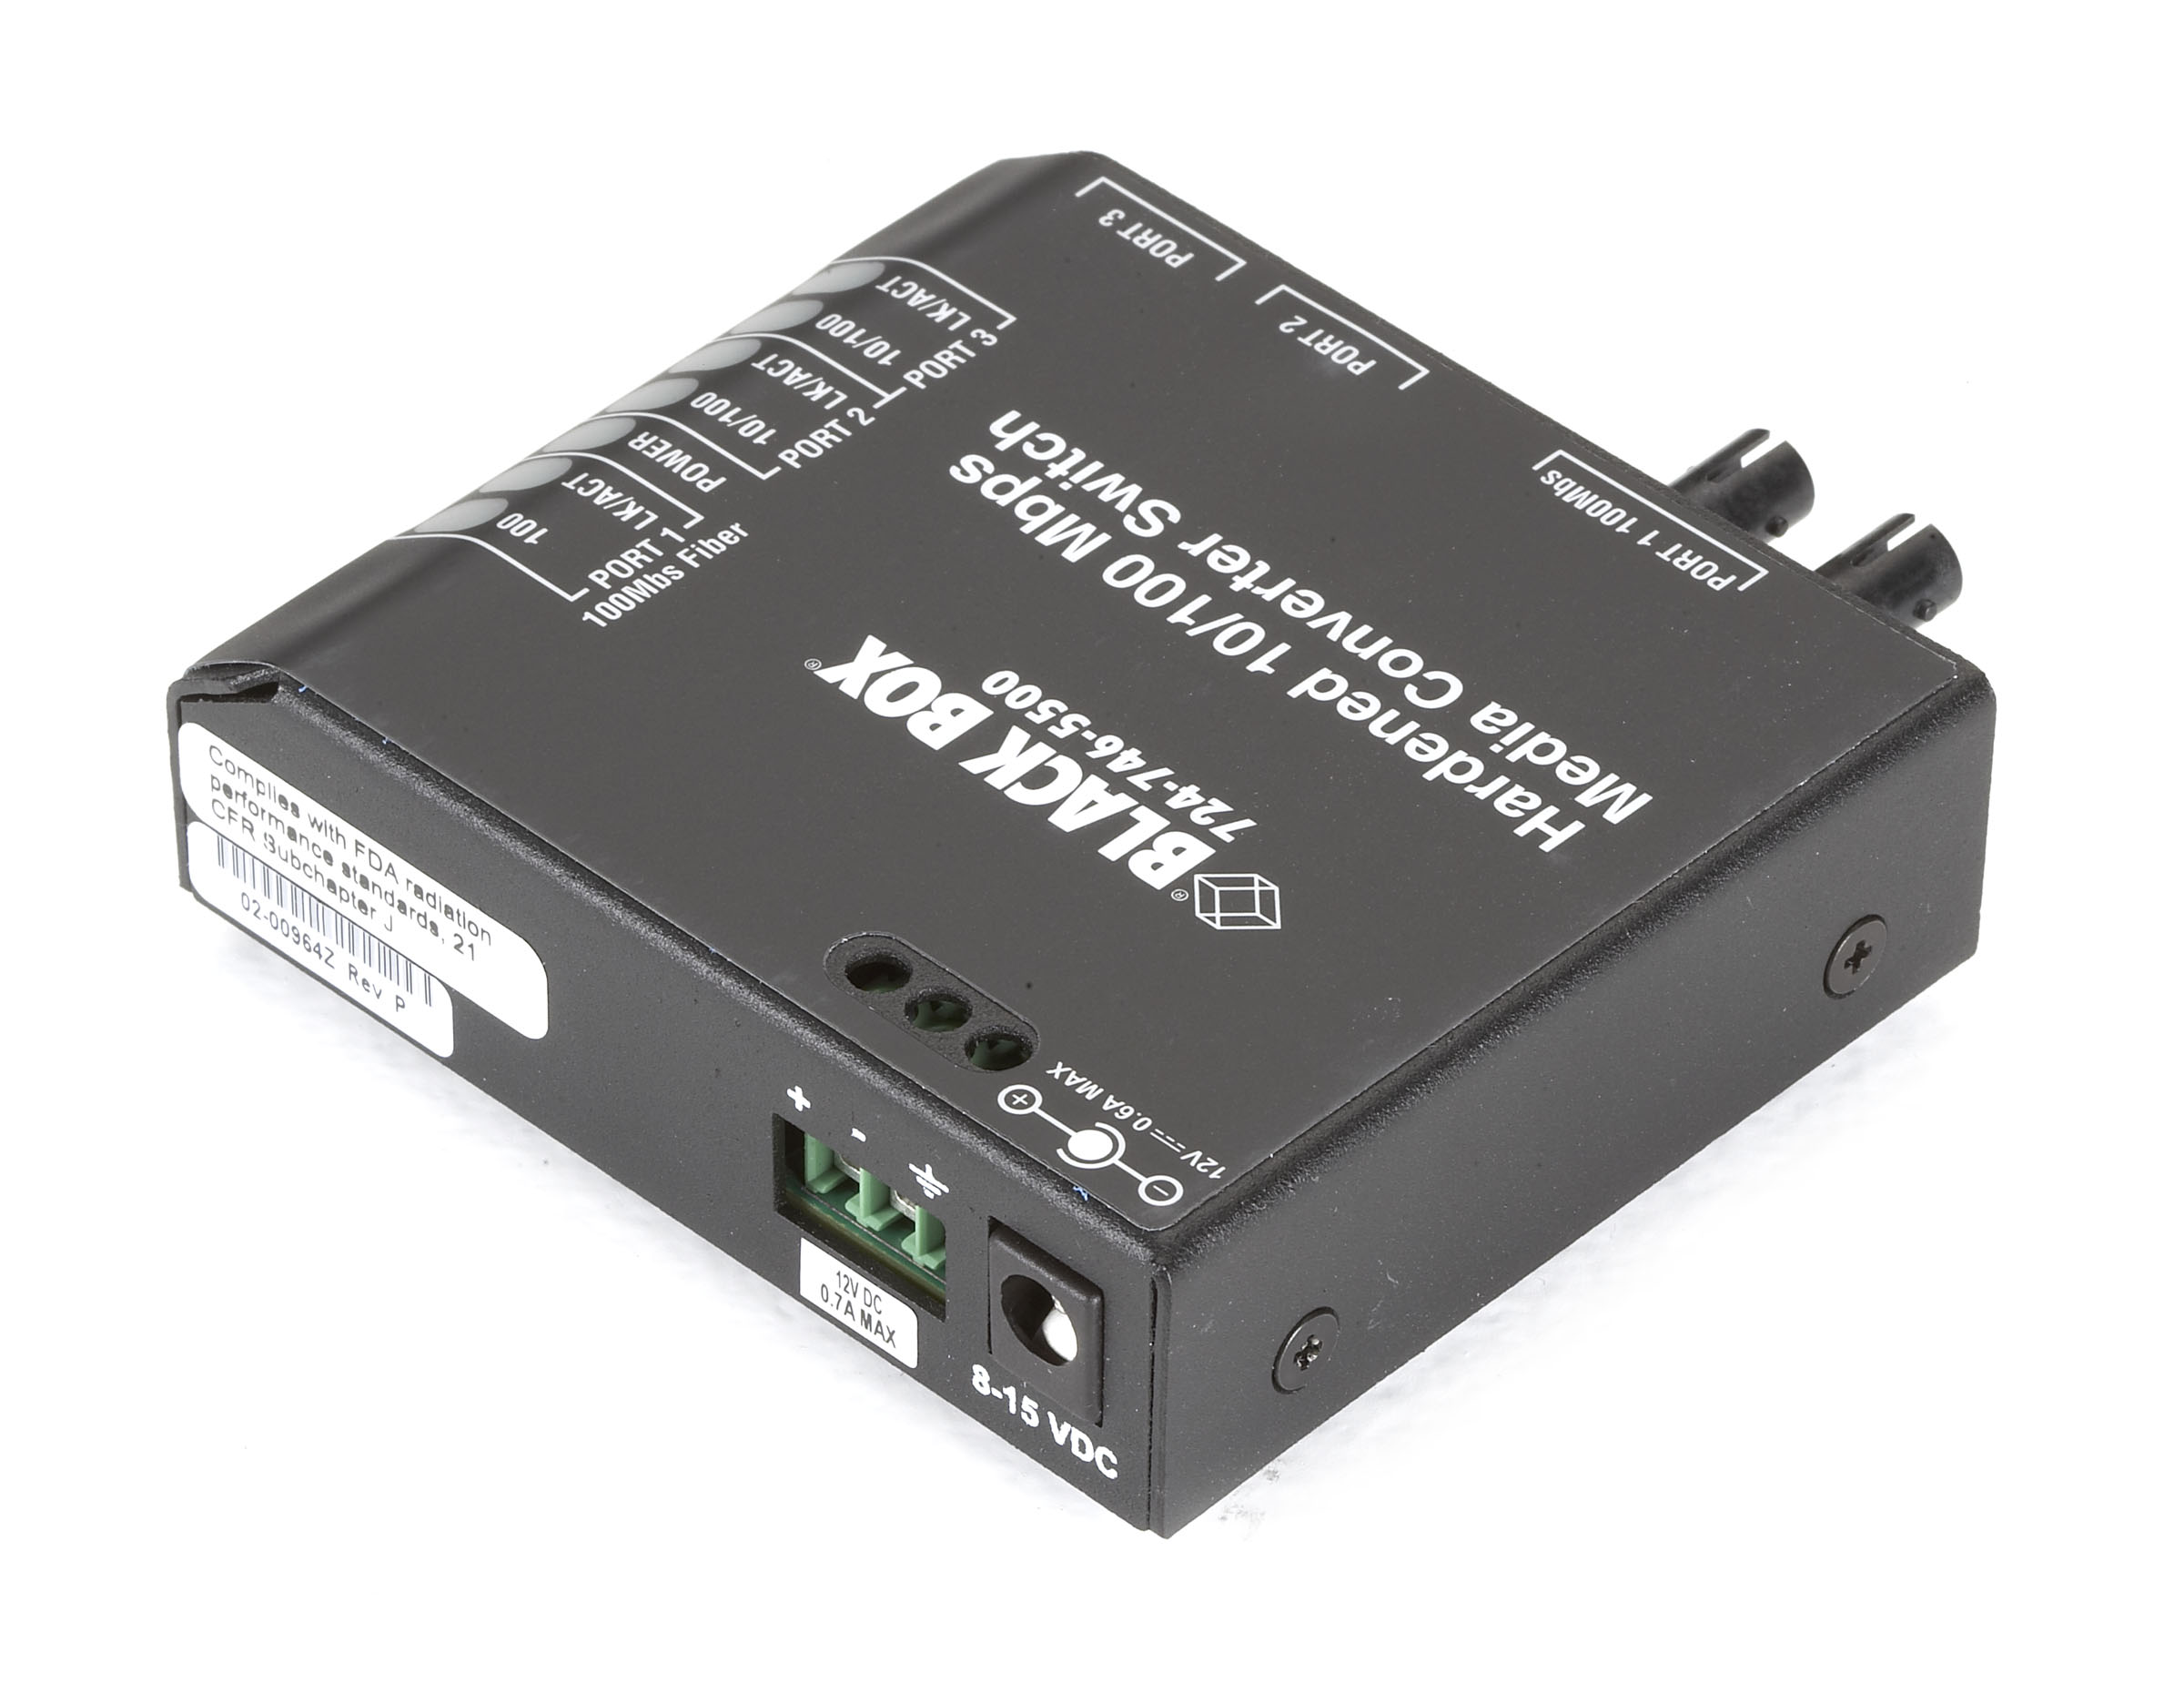 Black Box Hardened Convenient Switch 4 Port 24 VDC Din Rail mount 724-746-5500 